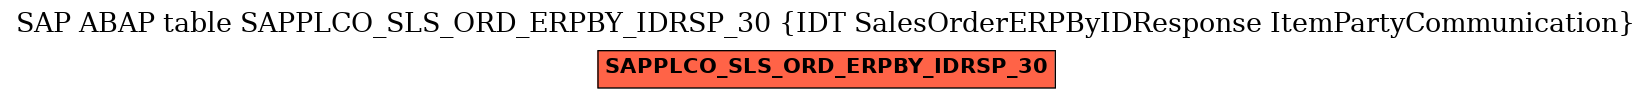 E-R Diagram for table SAPPLCO_SLS_ORD_ERPBY_IDRSP_30 (IDT SalesOrderERPByIDResponse ItemPartyCommunication)